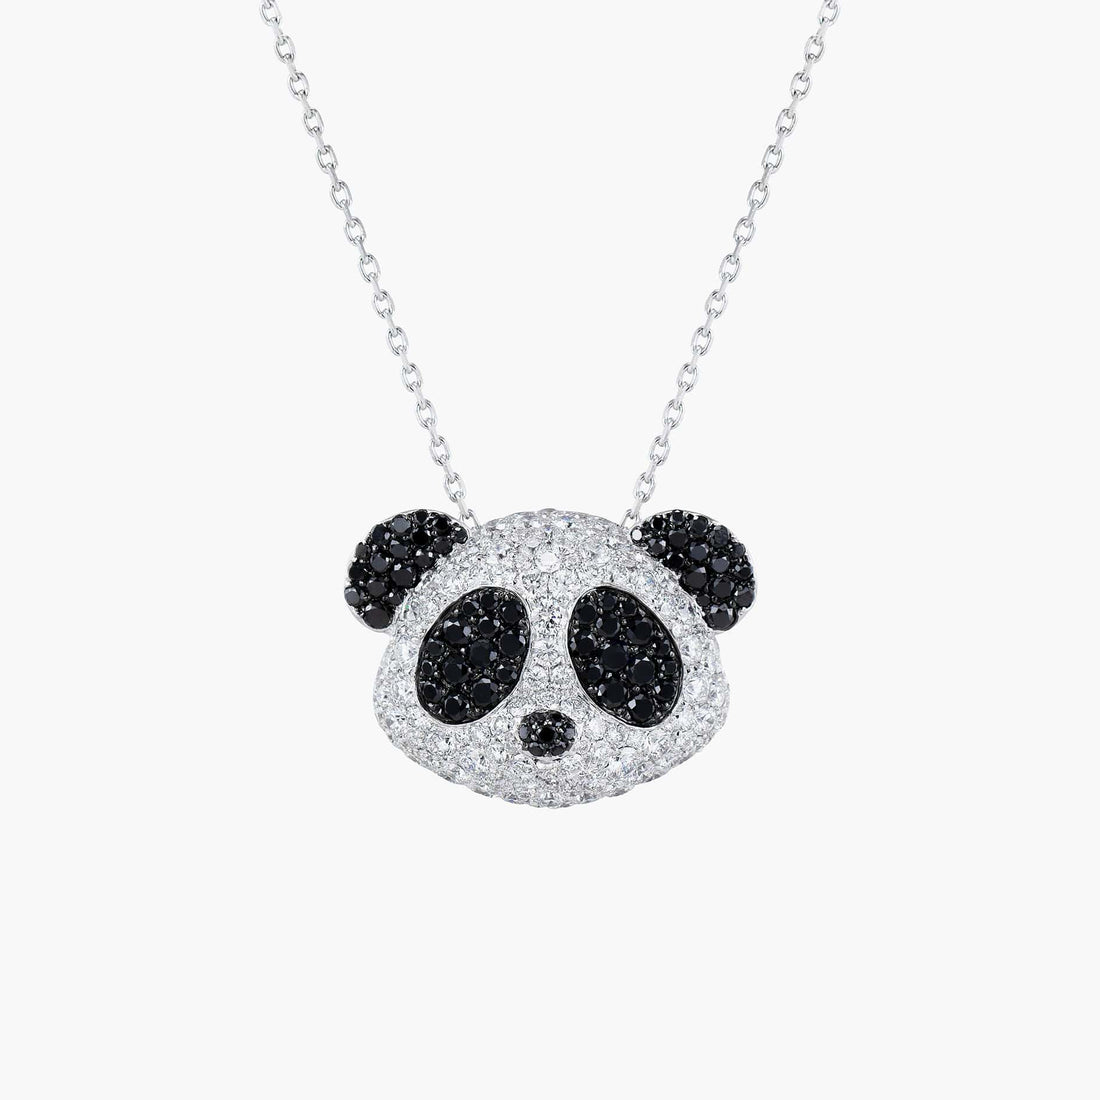 18CT White Gold and Diamond Panda Pendant Necklace - Robert Anthony Jewellers, Edinburgh